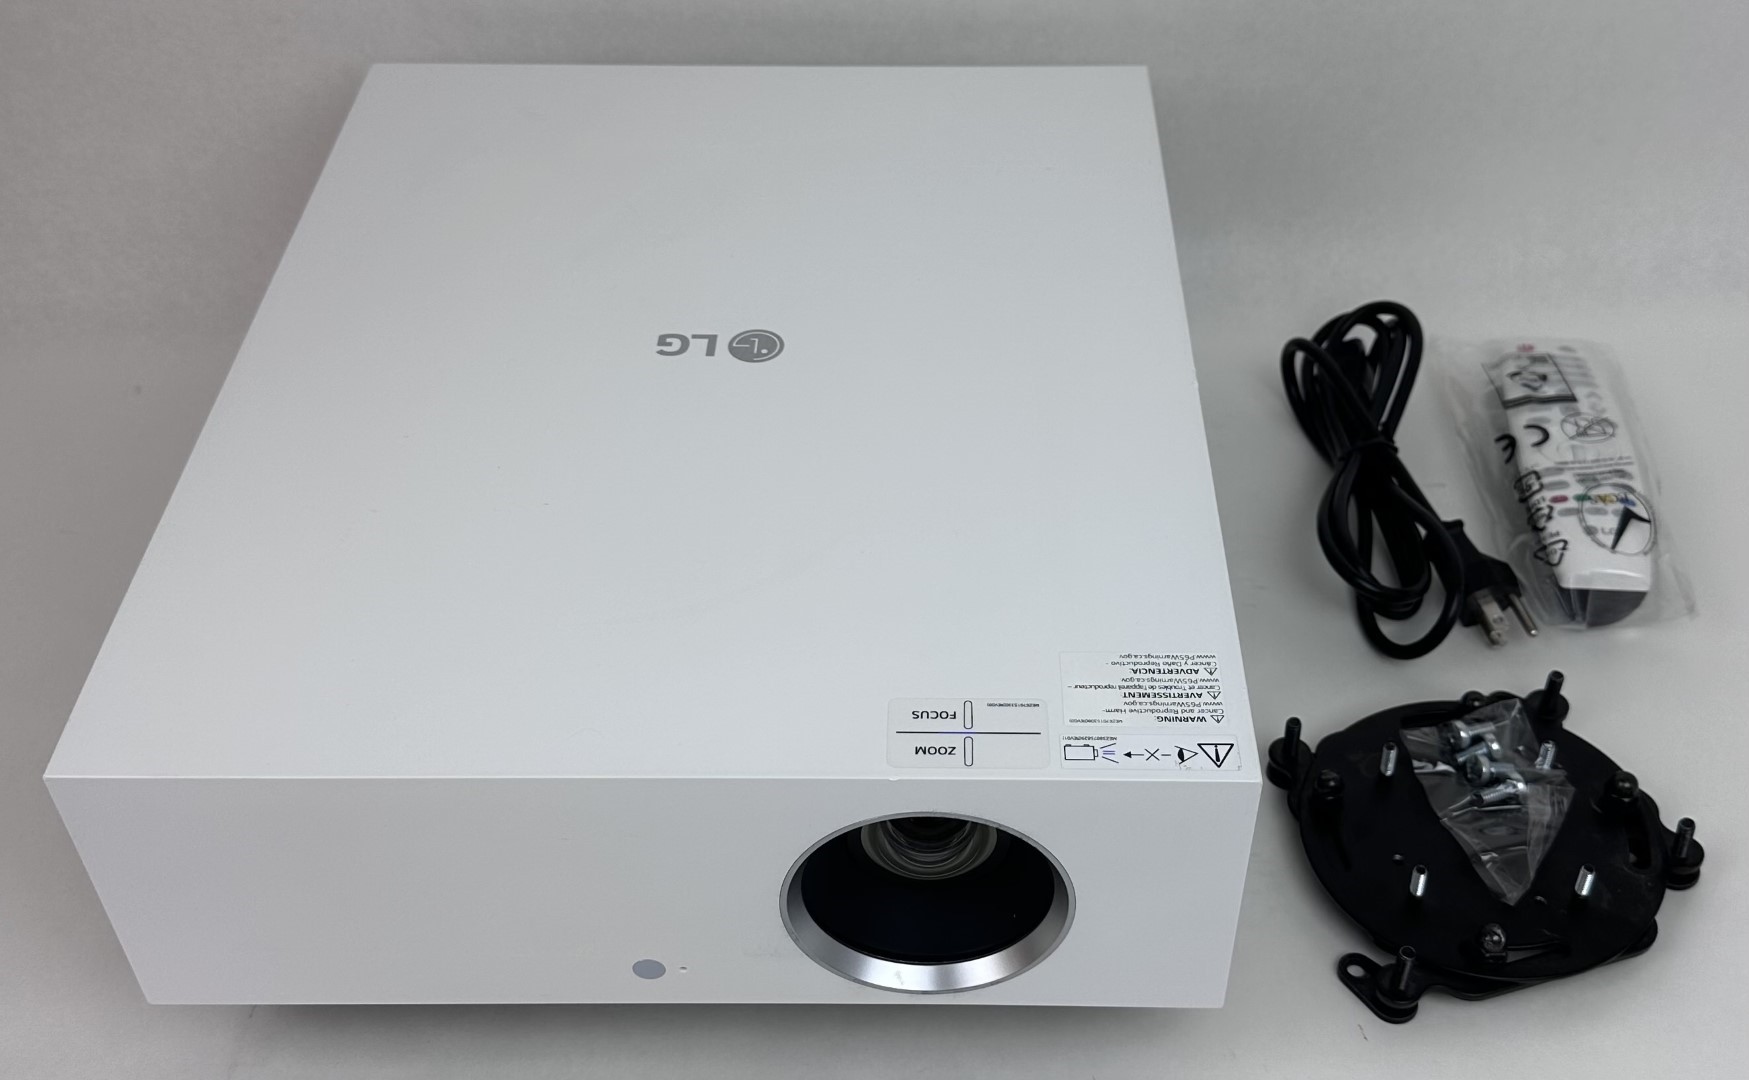 LG HU810PW 4K UHD Smart Laser CineBeam Projector - 0 hours